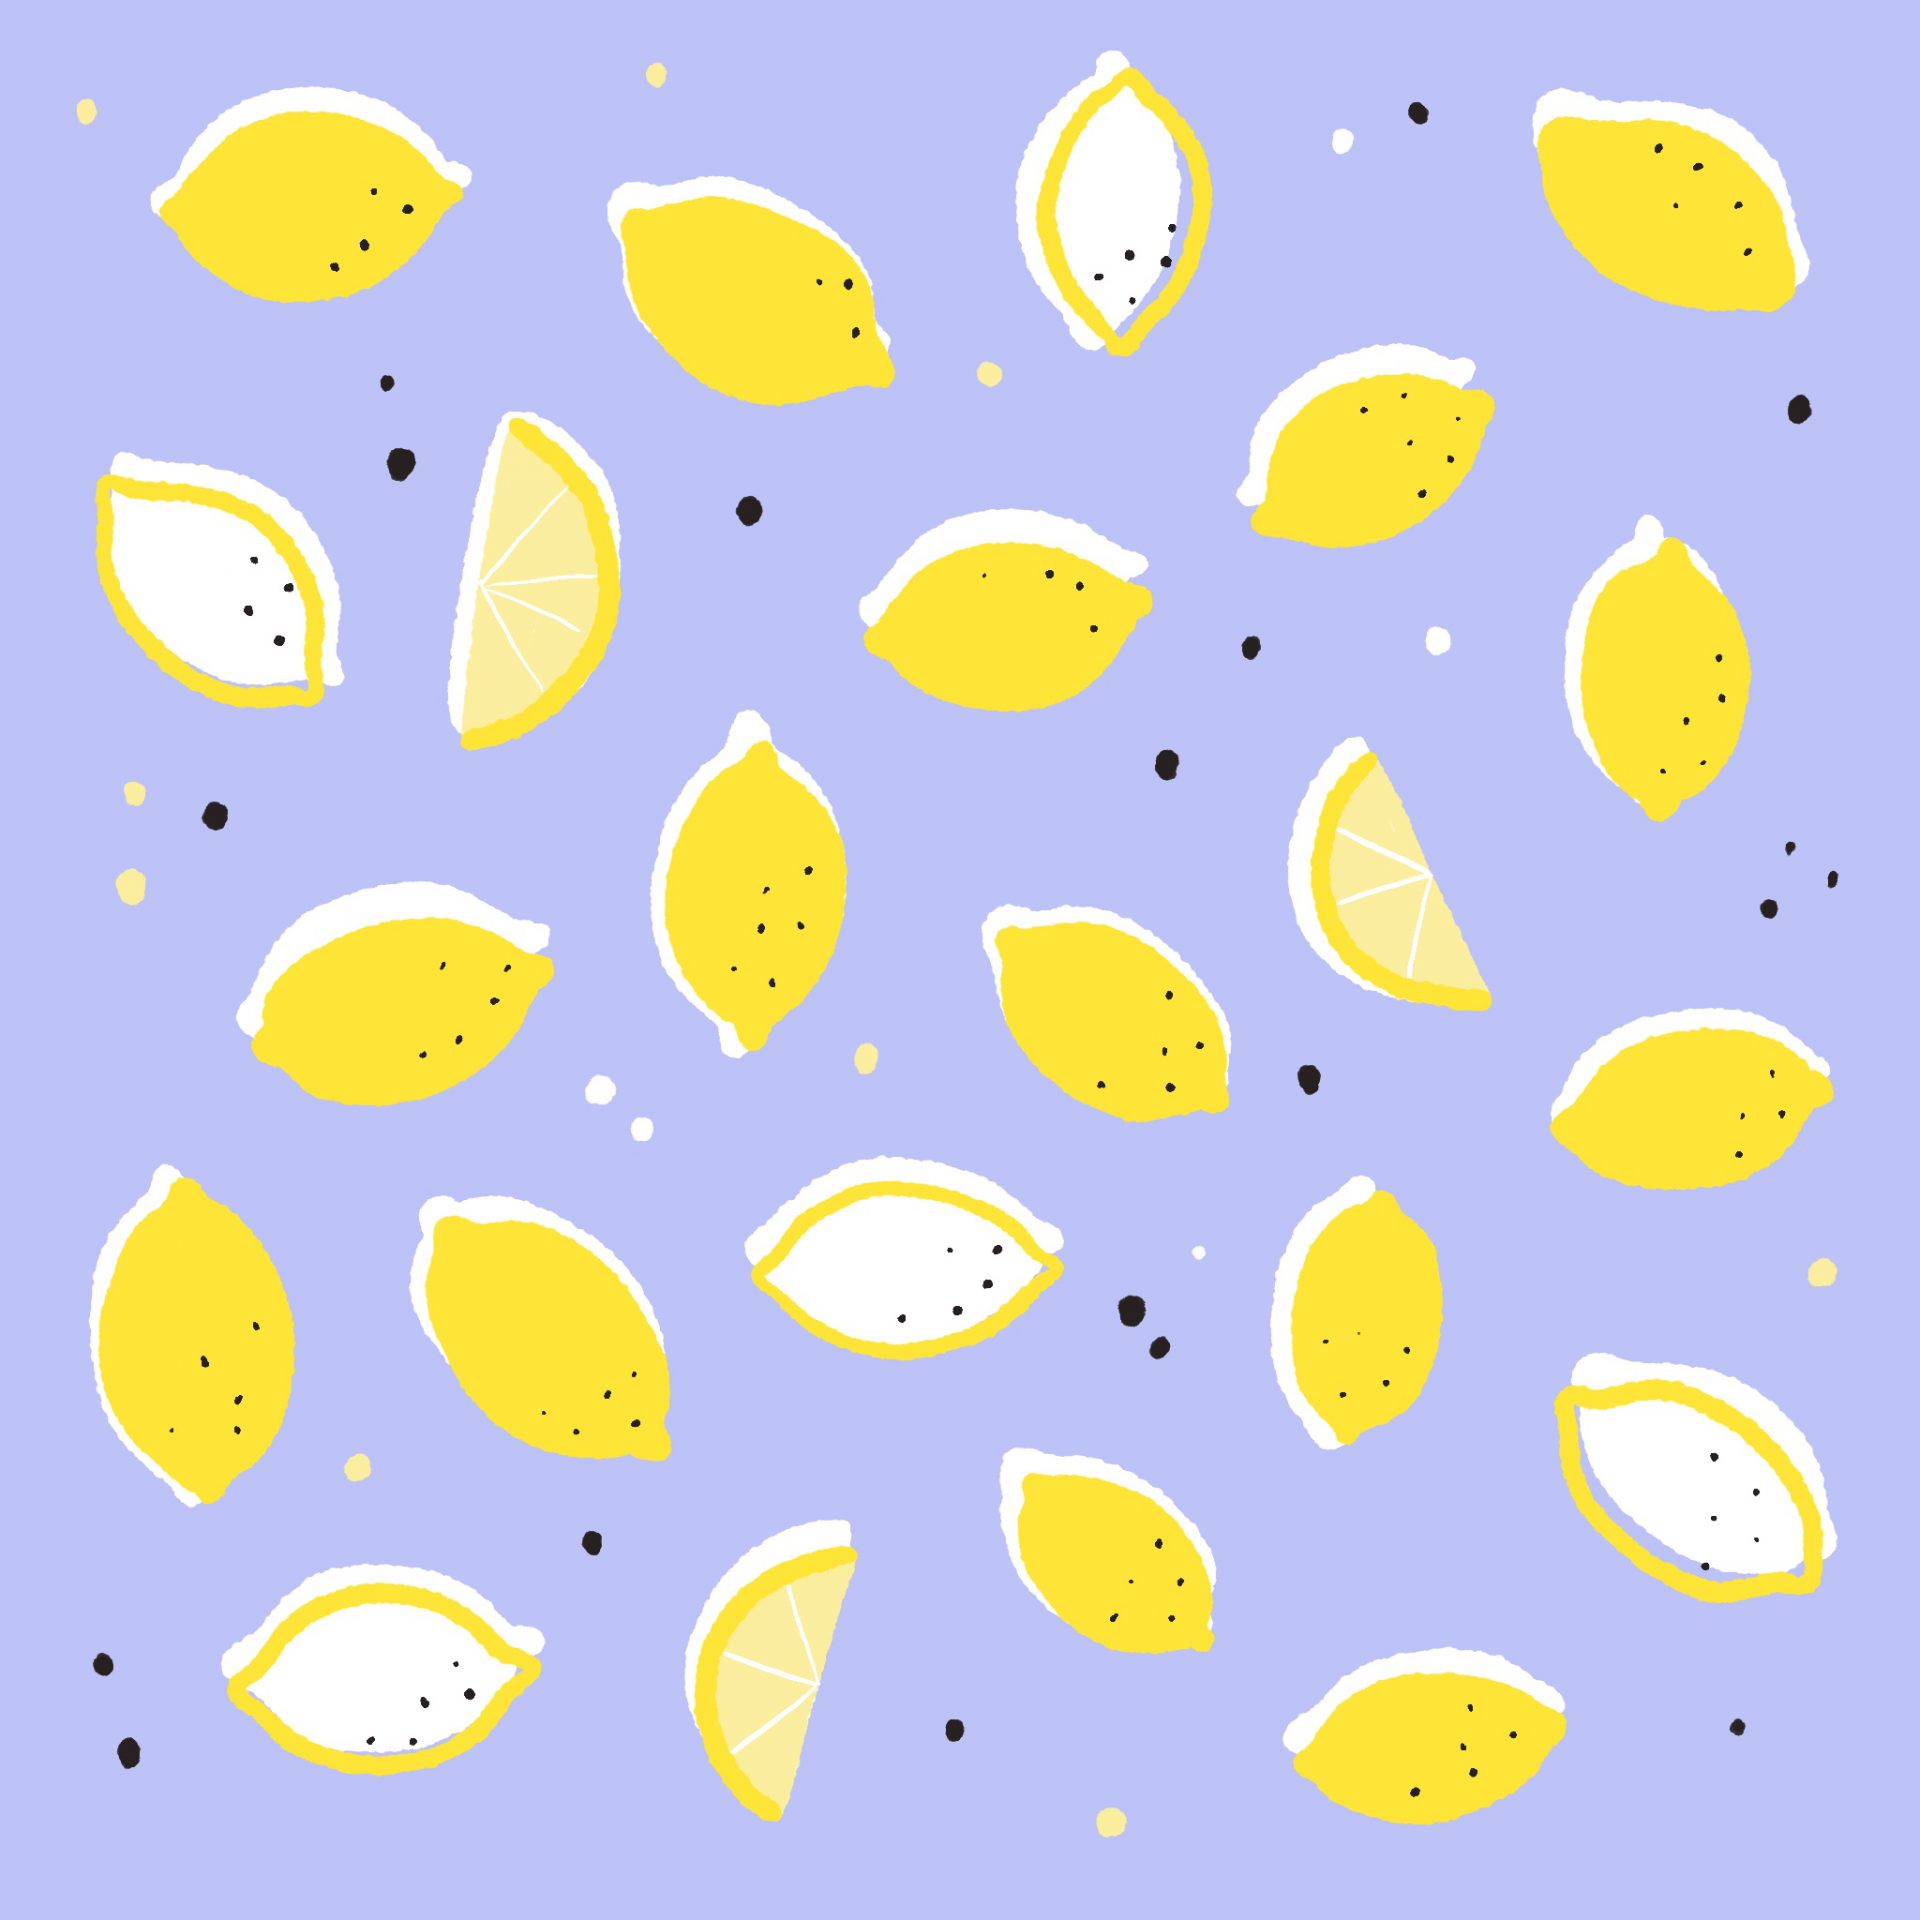 An illustrated pattern of lemons